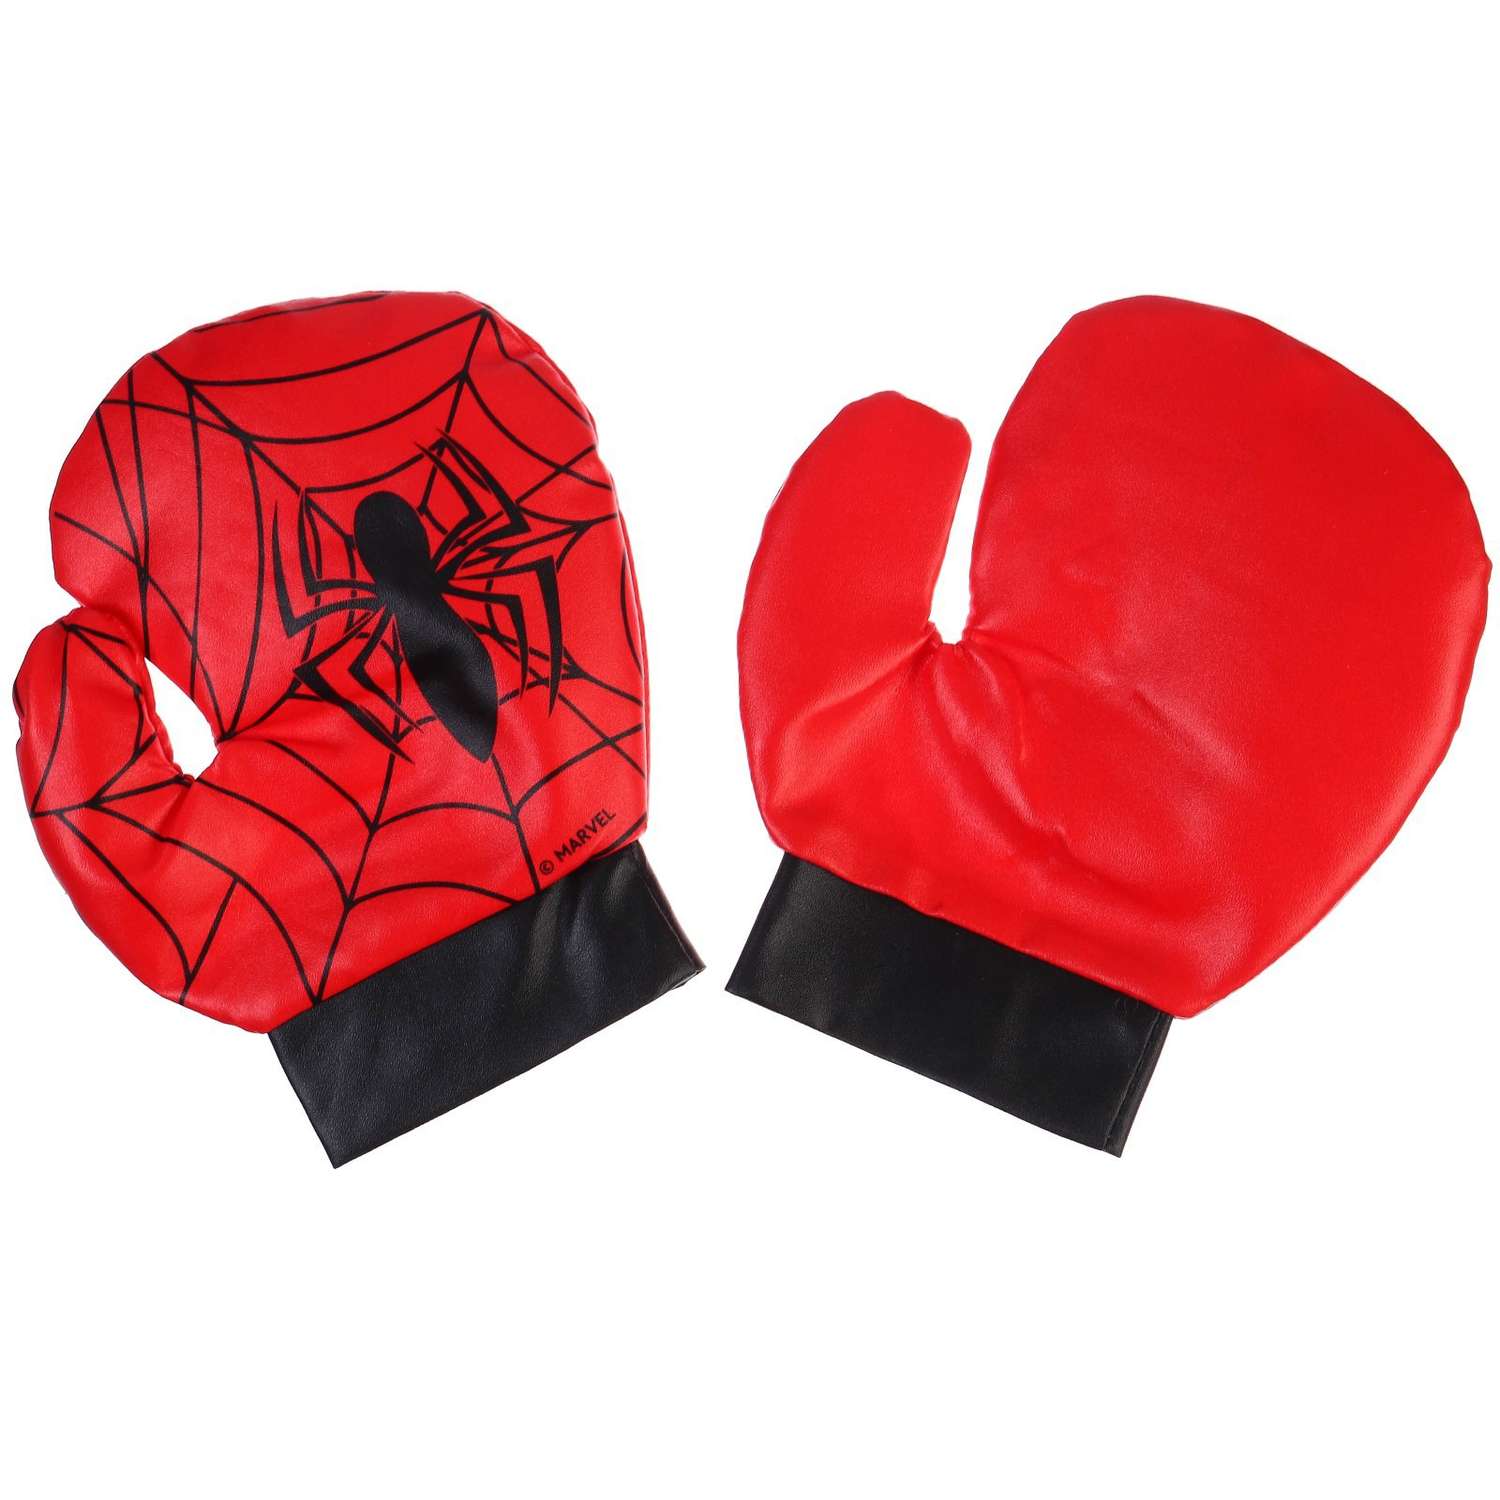 Игровой набор MARVEL для бокса «Супер-удар» груша 13х13х35 см Человек-паук - фото 5